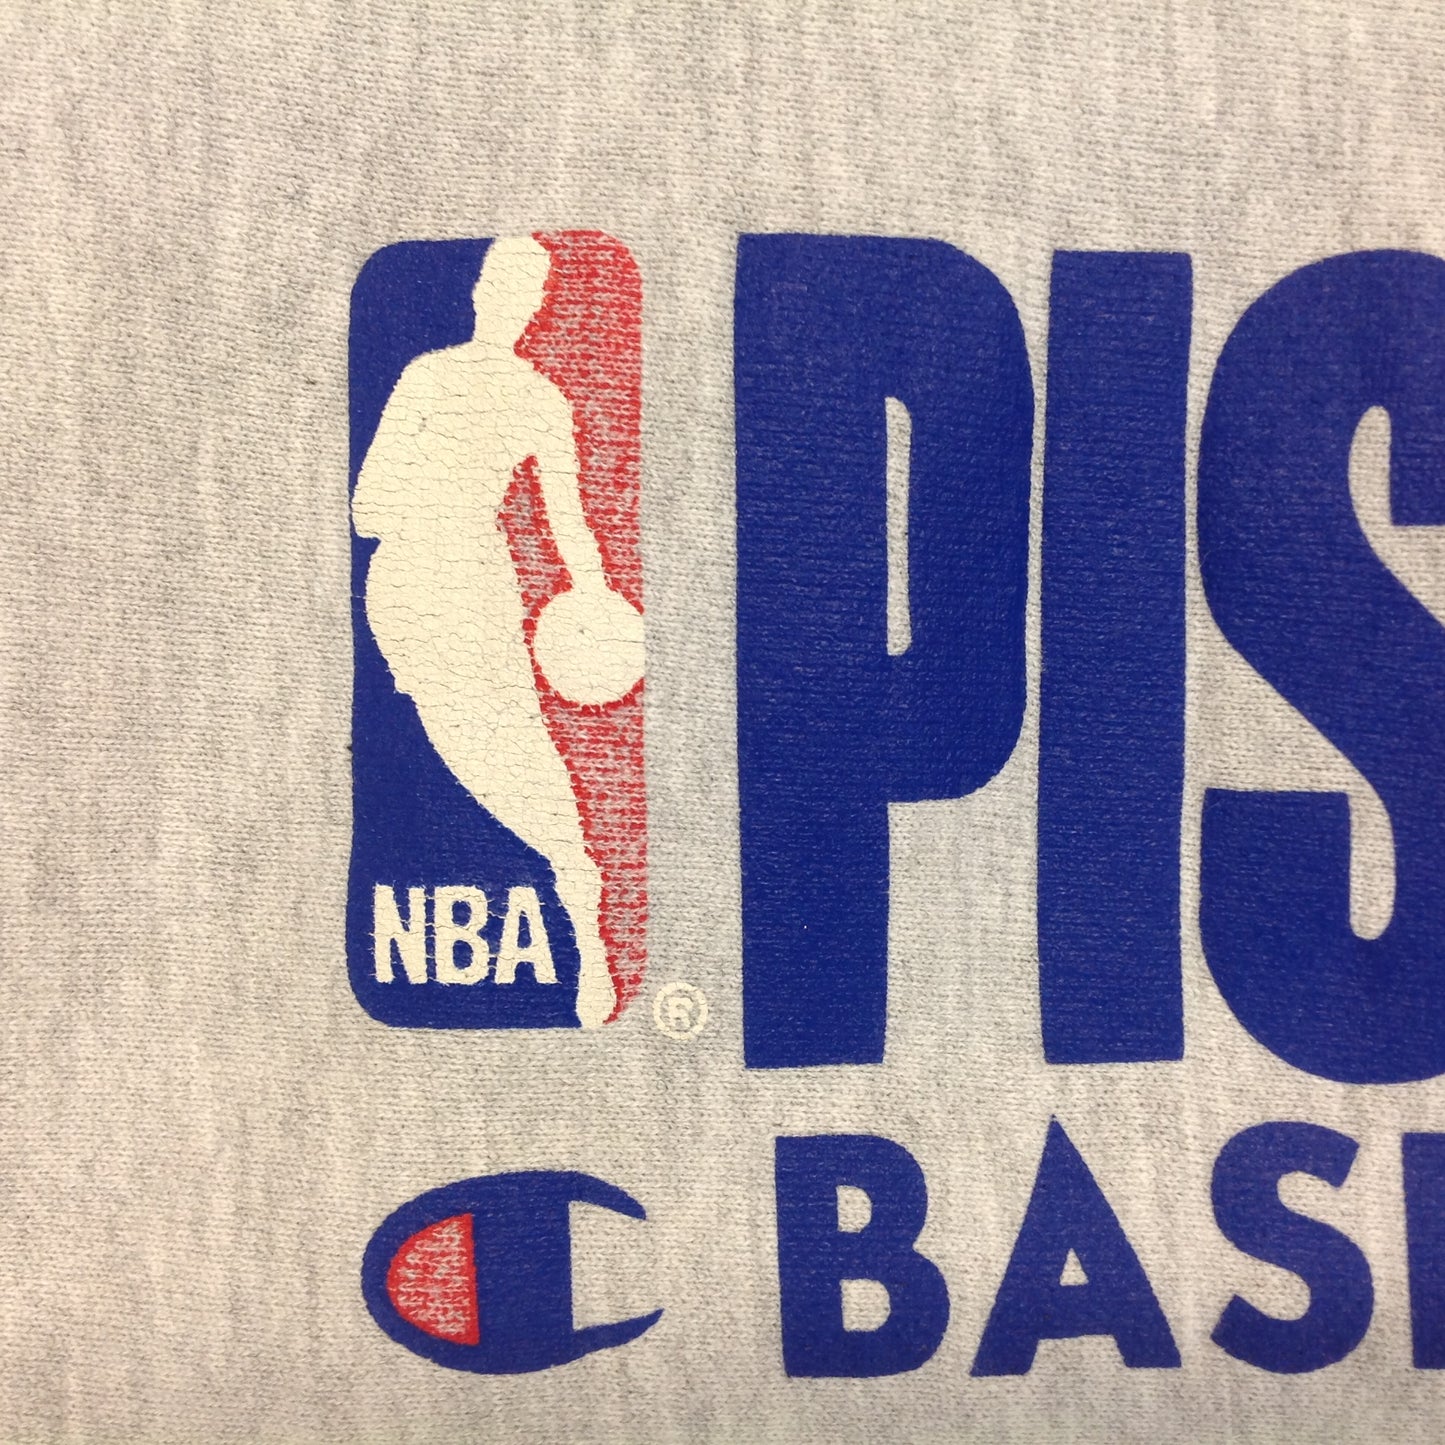 Vintage 1990's Champion Long Sleeve Reverse Weave Sweatshirt Gray Detroit Pistons Basketball